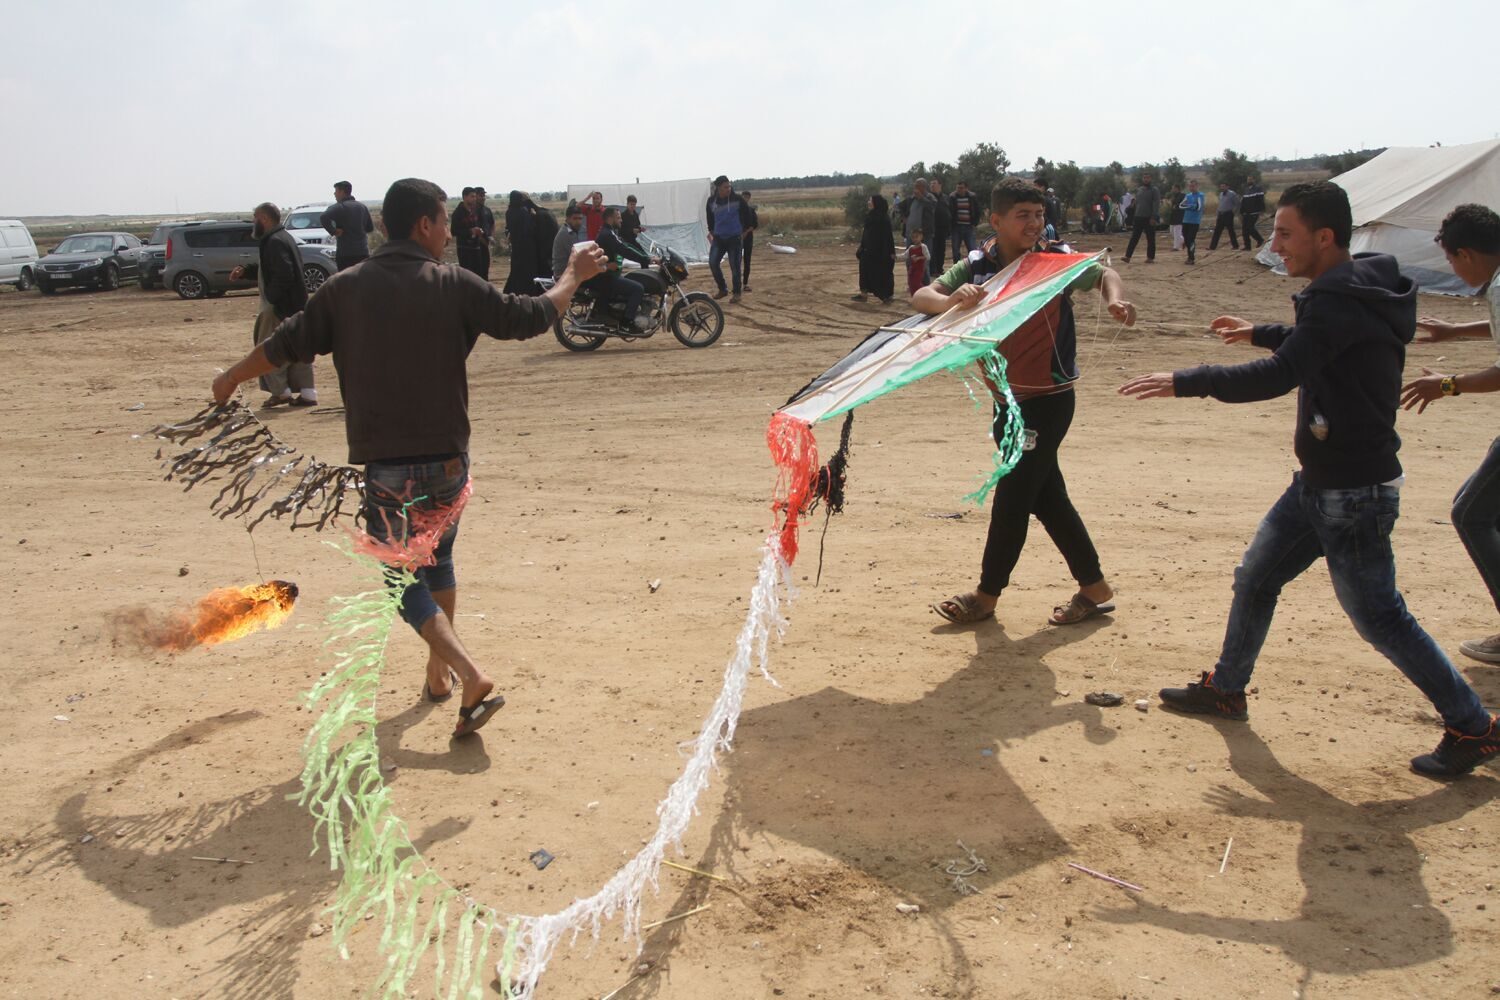 Gaza protest kites march of return